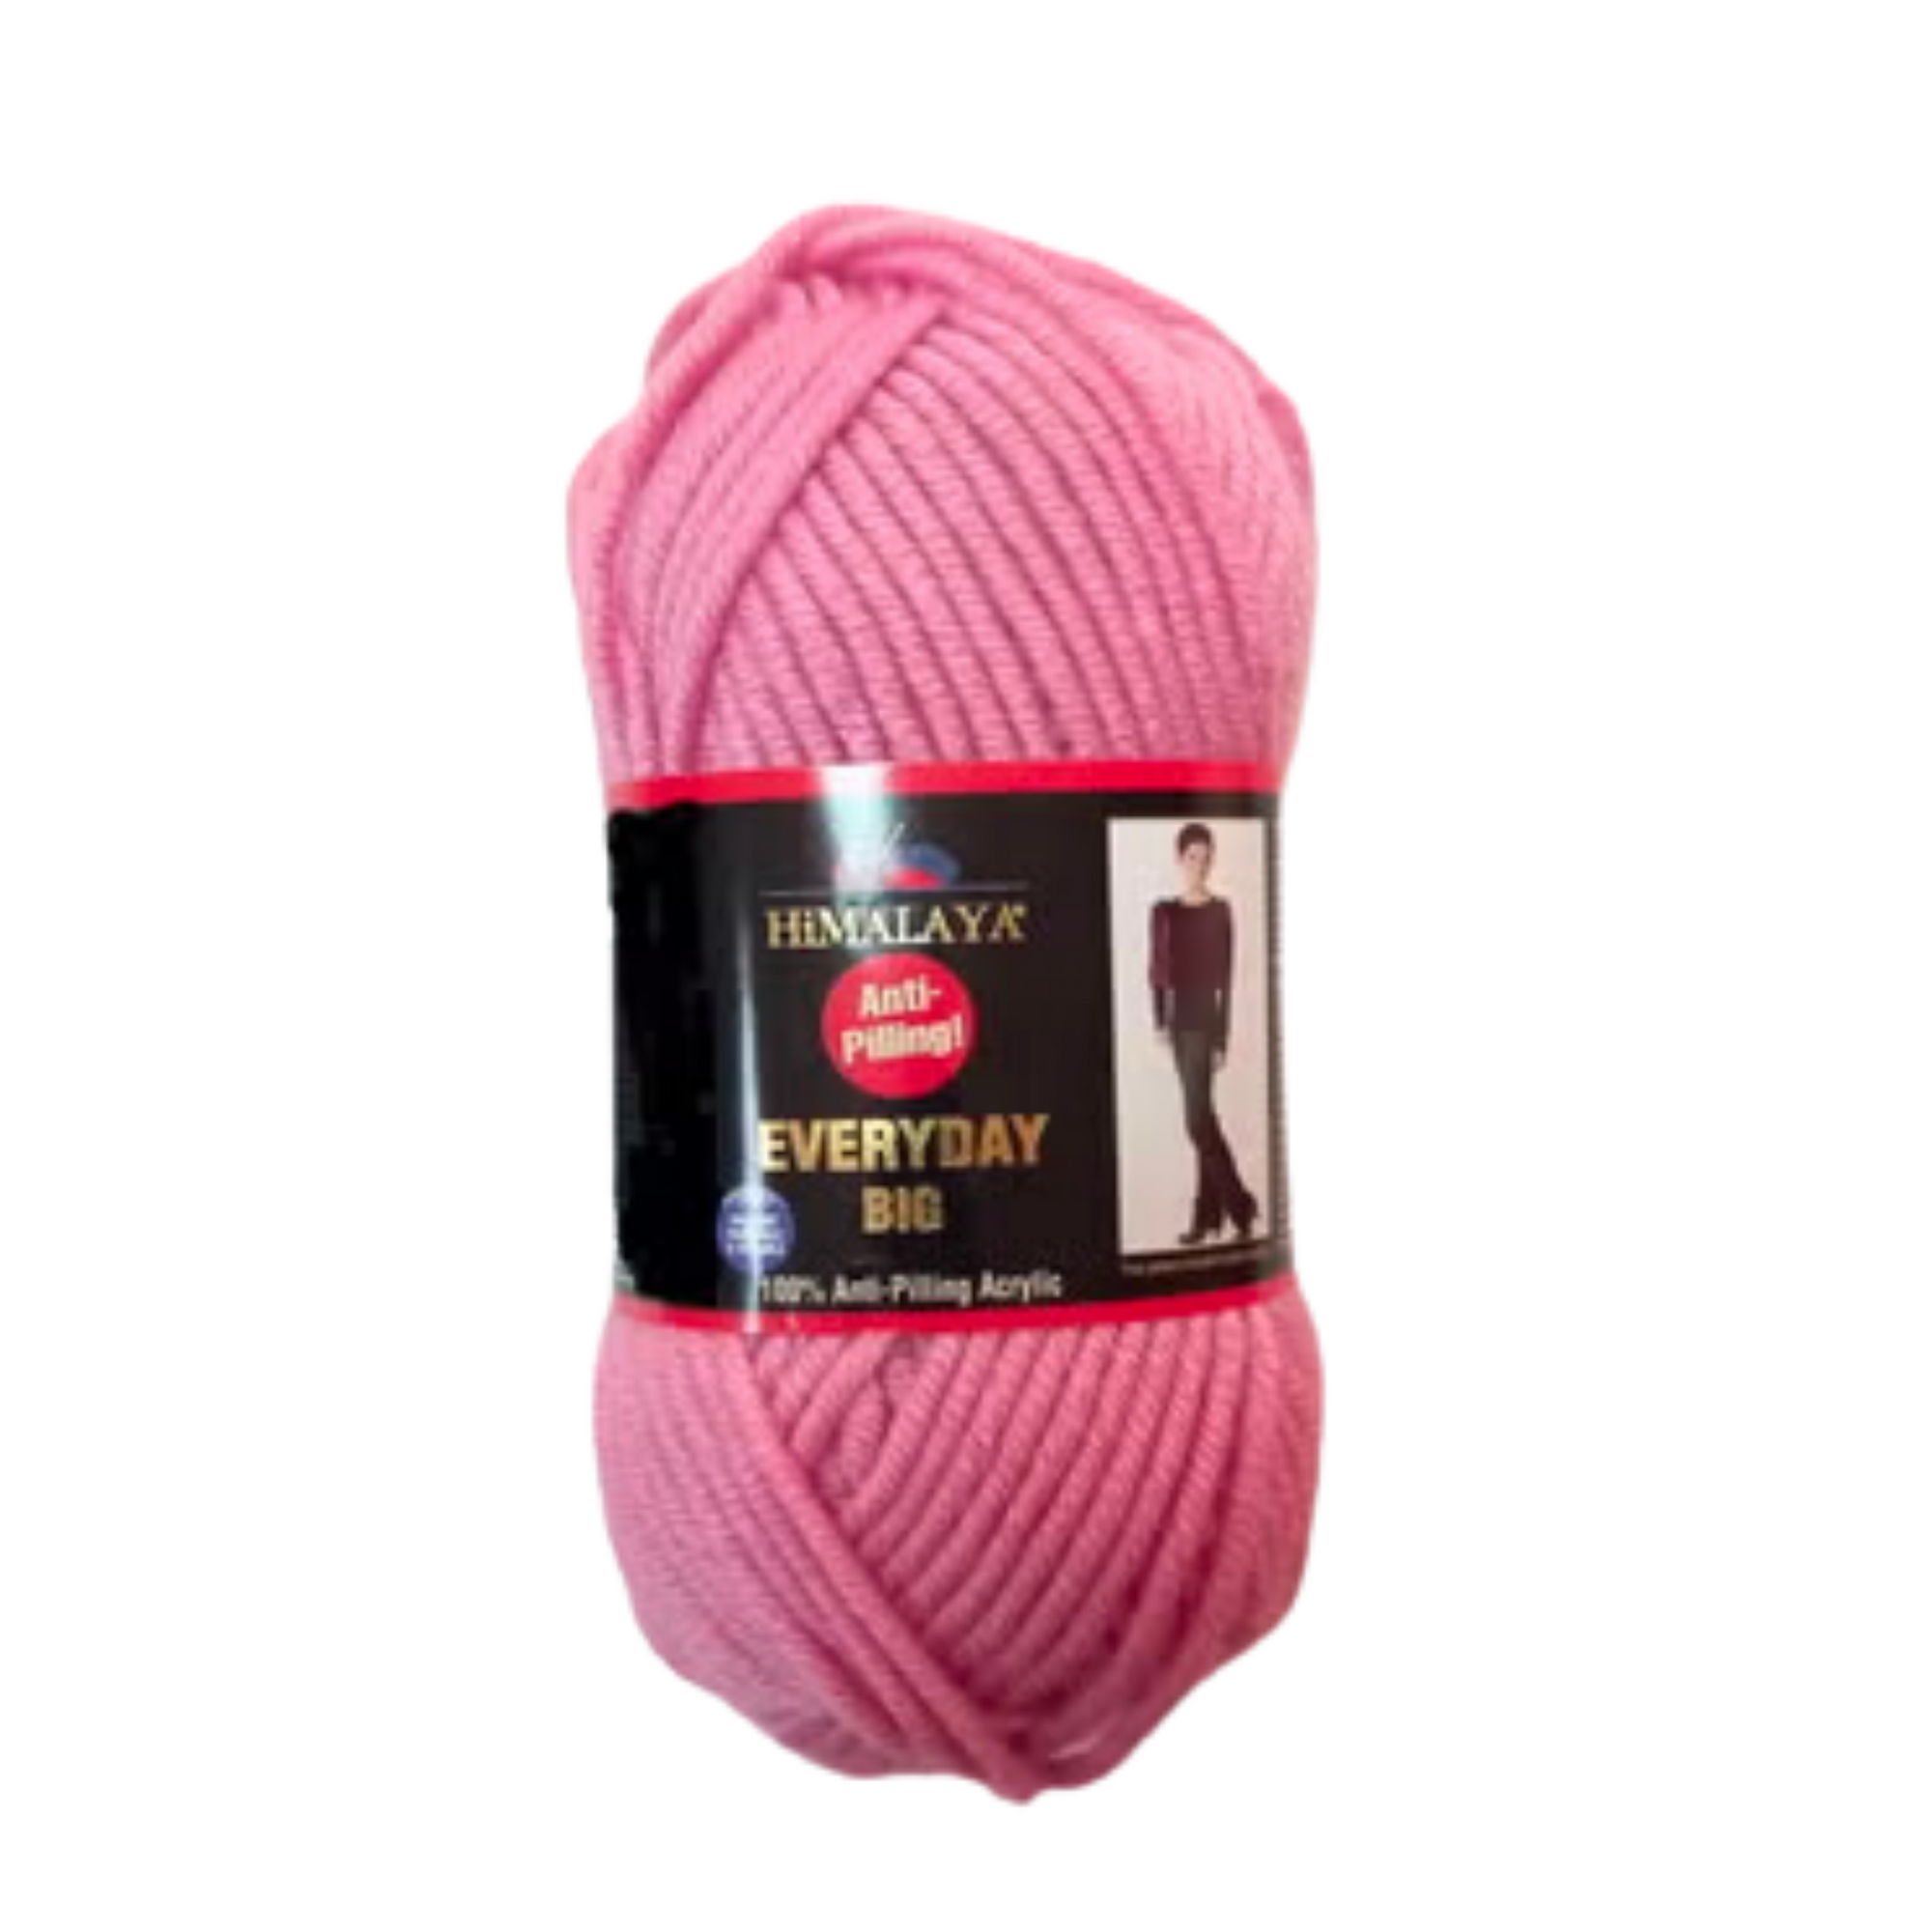 Himalaya Everyday 100% Anti-Pilling Acrylic Yarn, Pink Jazz  - 70816